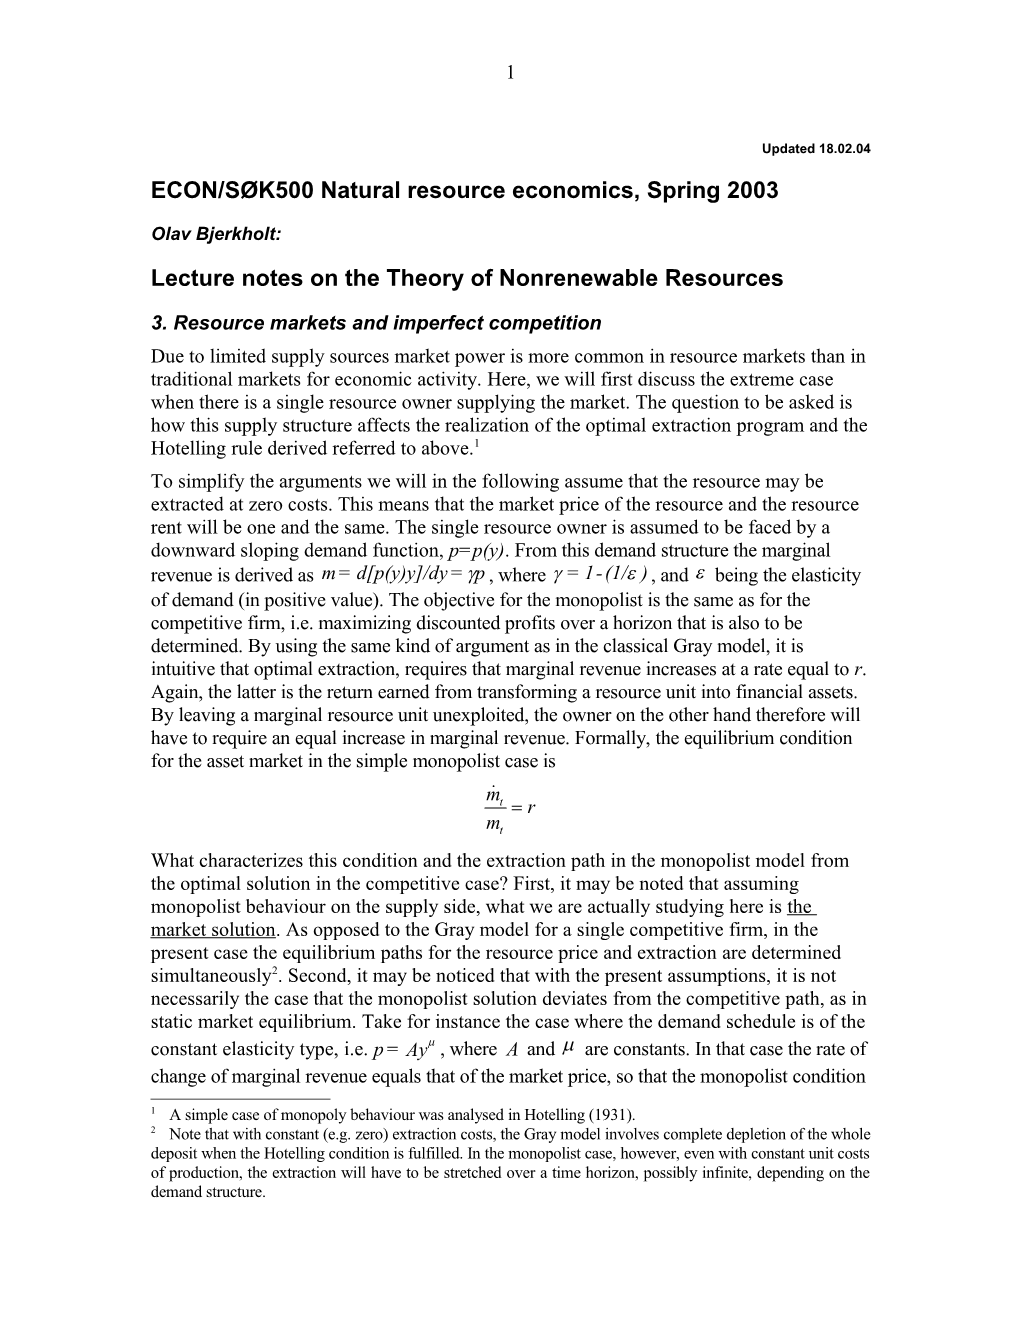 ECON/SØK500 Natural Resource Economics, Spring 2003